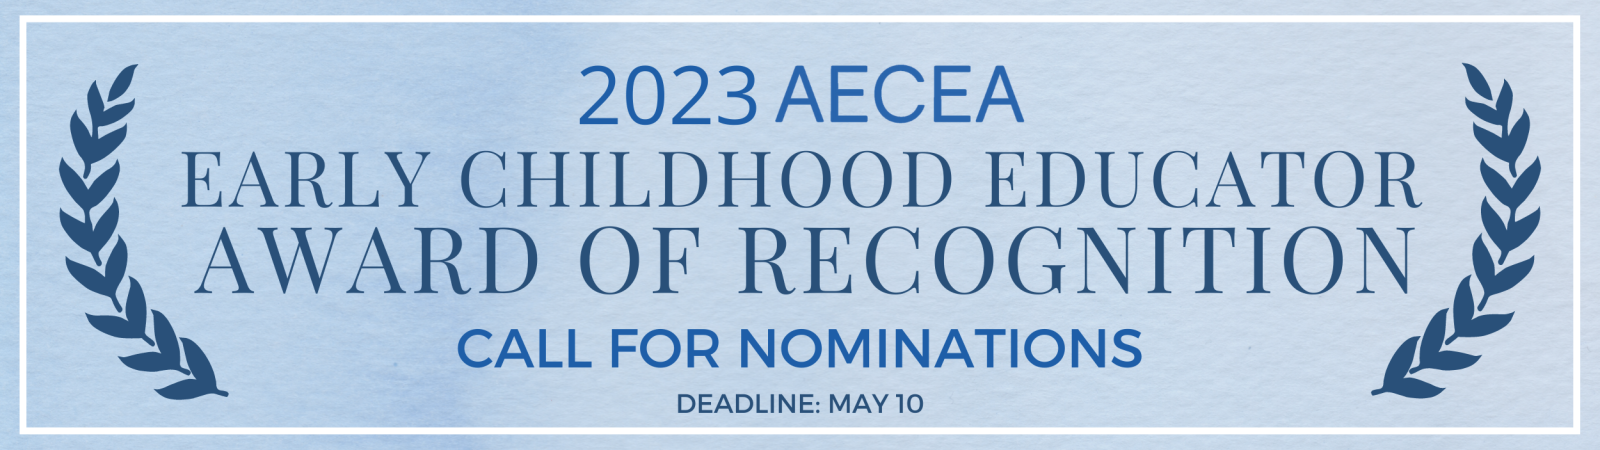 2023 AECEA ECE Award of Recognition Cover Photo